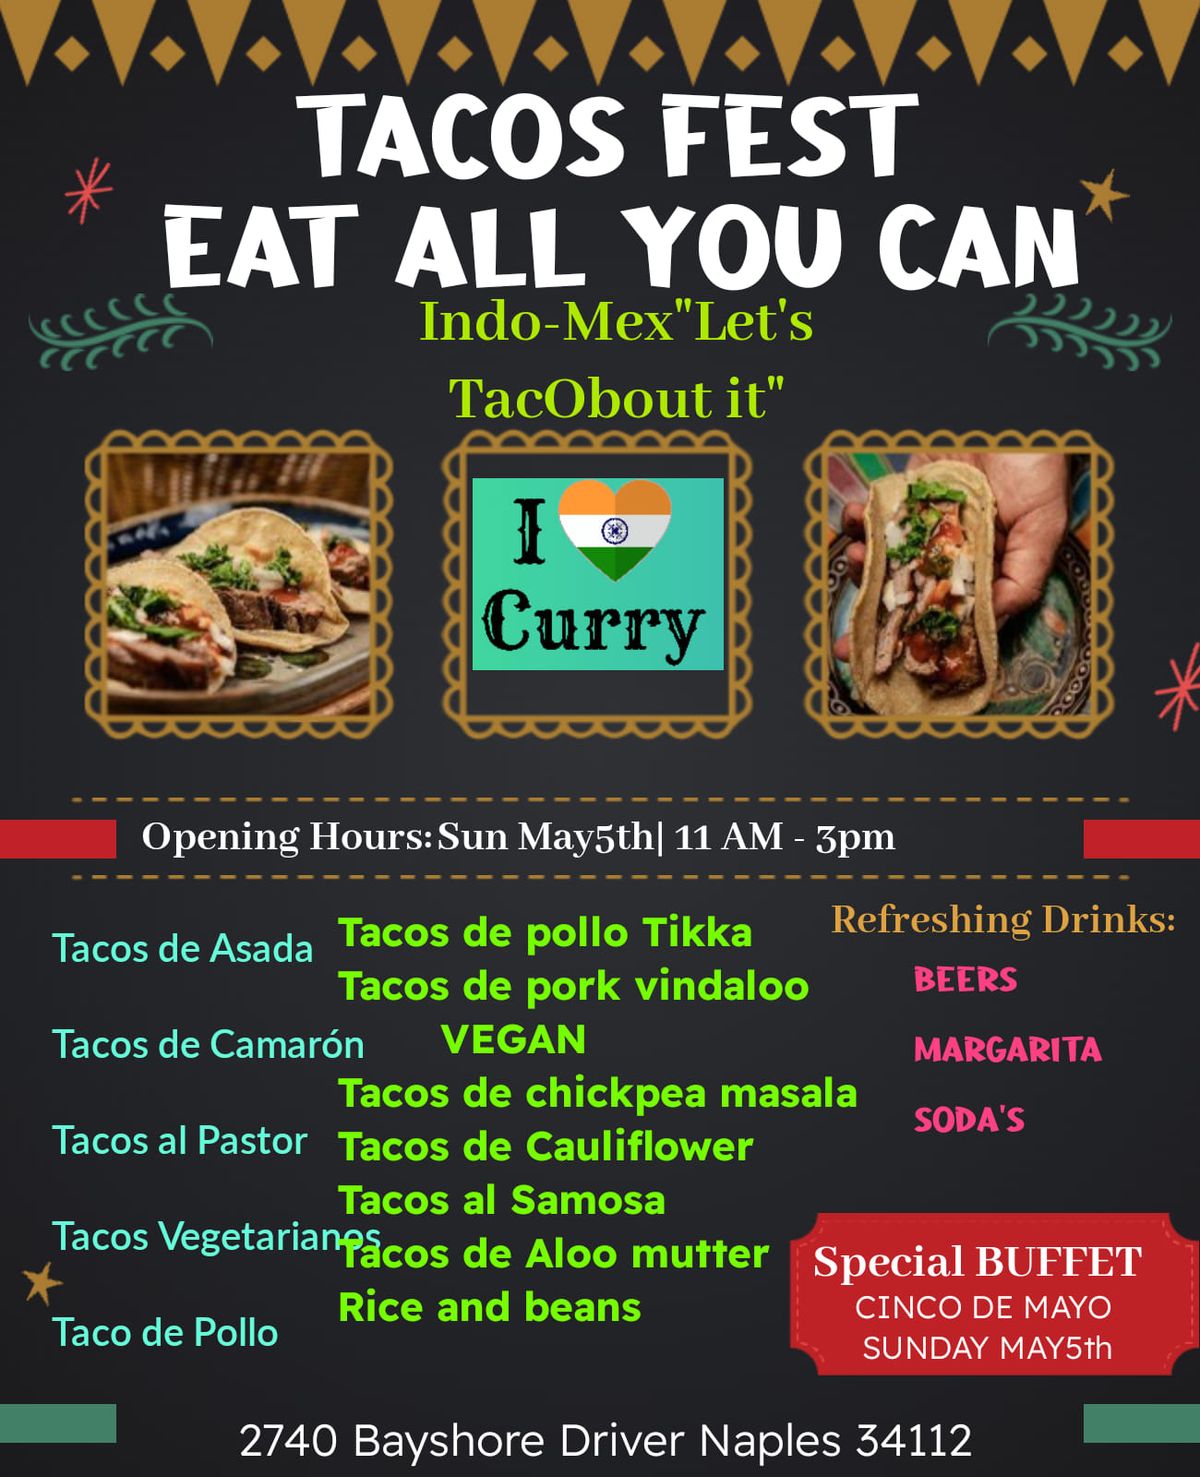 CINCO DE MAYO TACO FEST ALL YOU CAN EAT TACO BUFFET